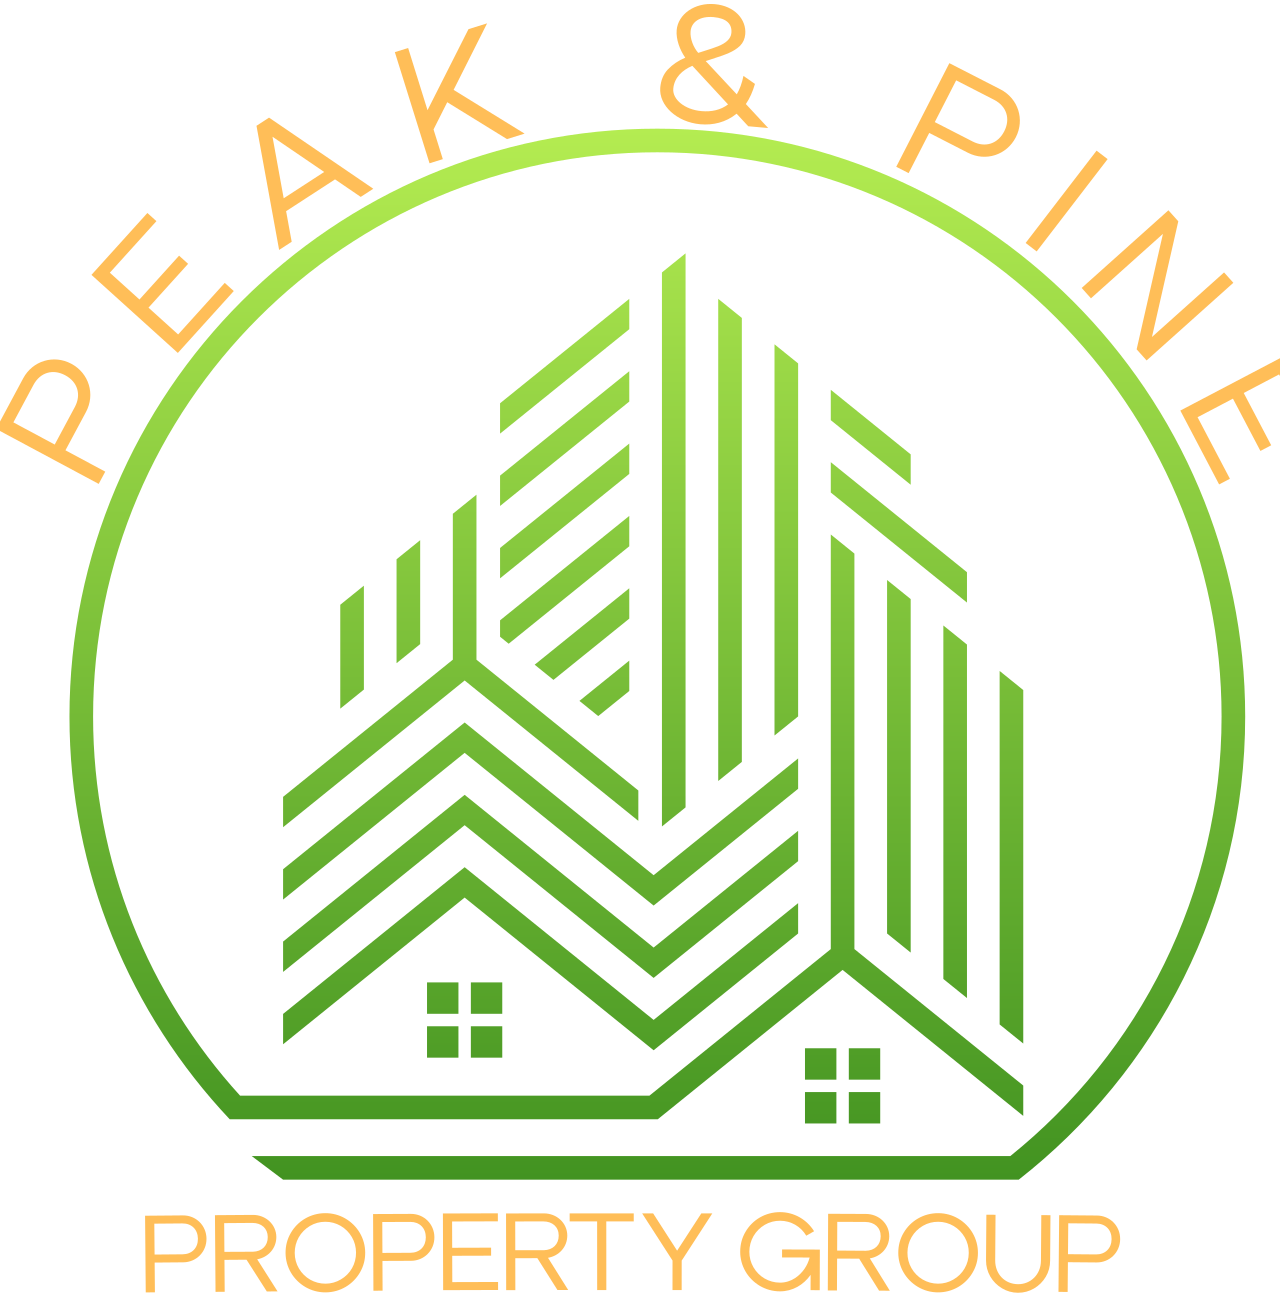 Peak and Pine Property Group's logo